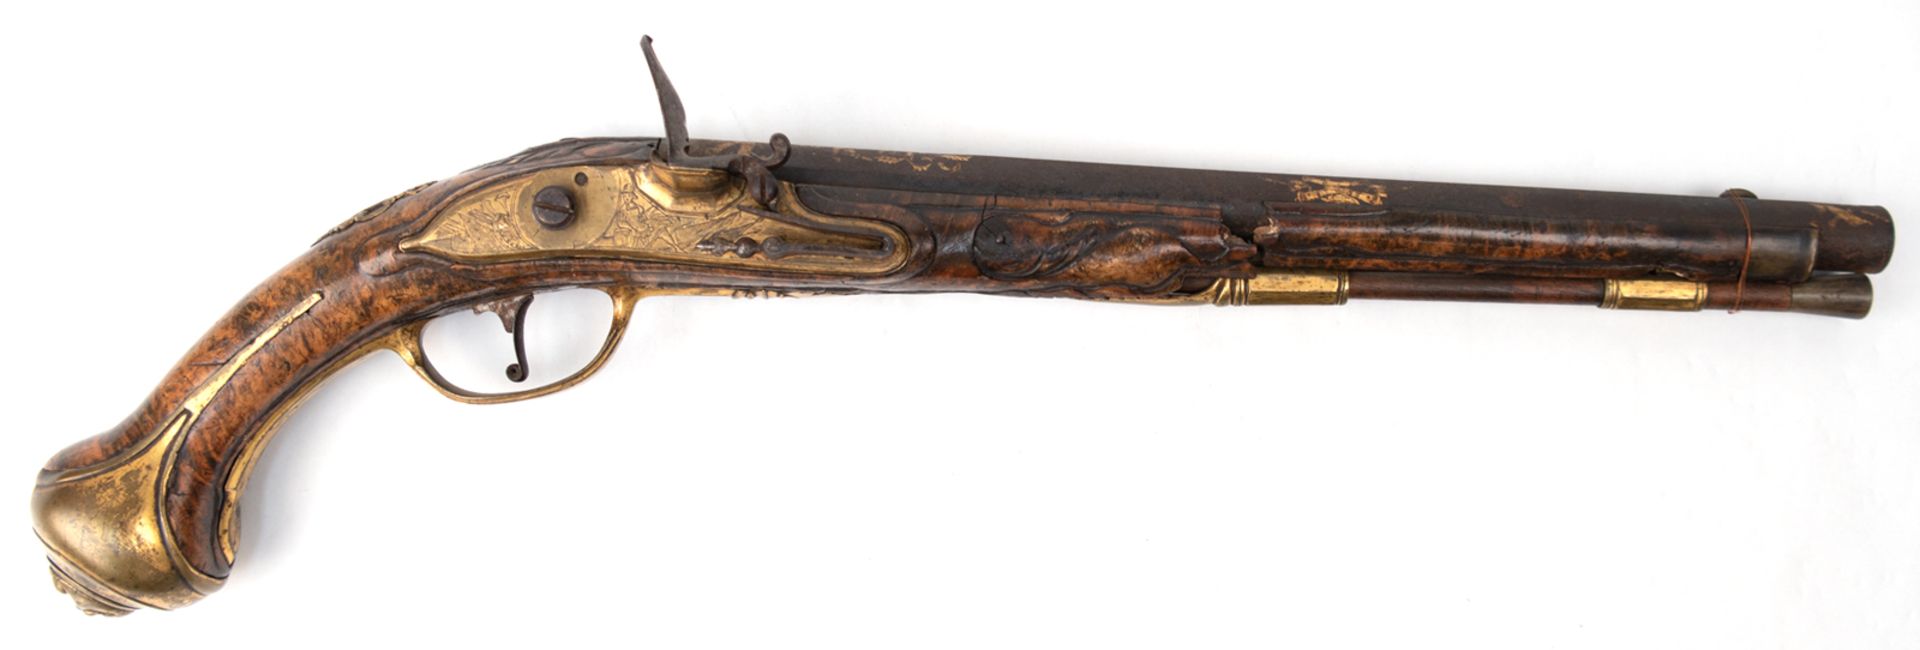 Steinschloßpistole, 18. Jh., nicht funktionstüchtig, Schloß defekt, starke Gebrauchspuren, L. 53 cm